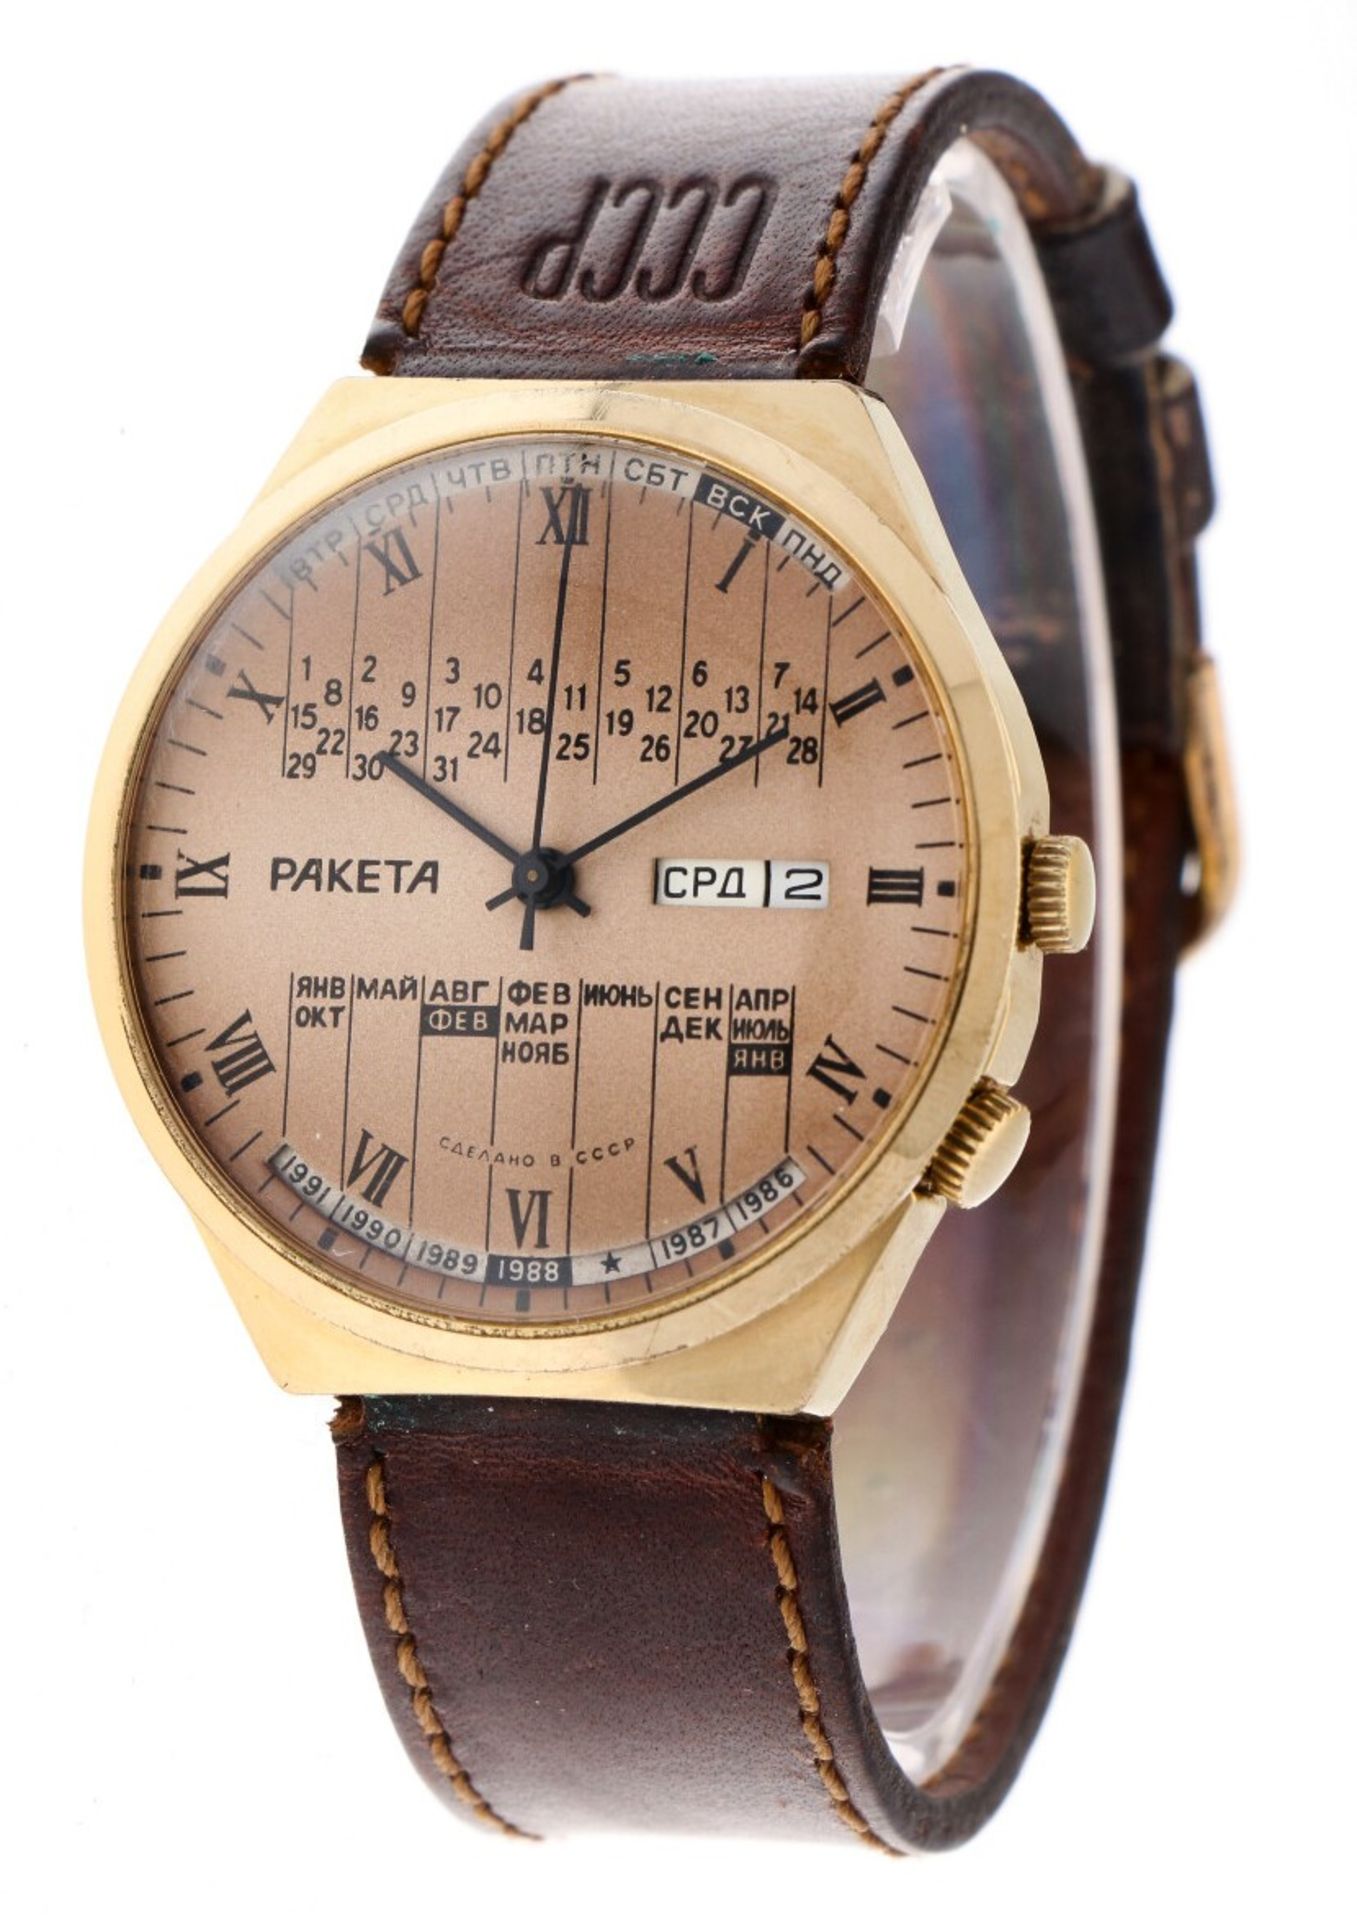 CCCP Paketa Day Date - Men's watch - approx. 1980 - Image 2 of 5